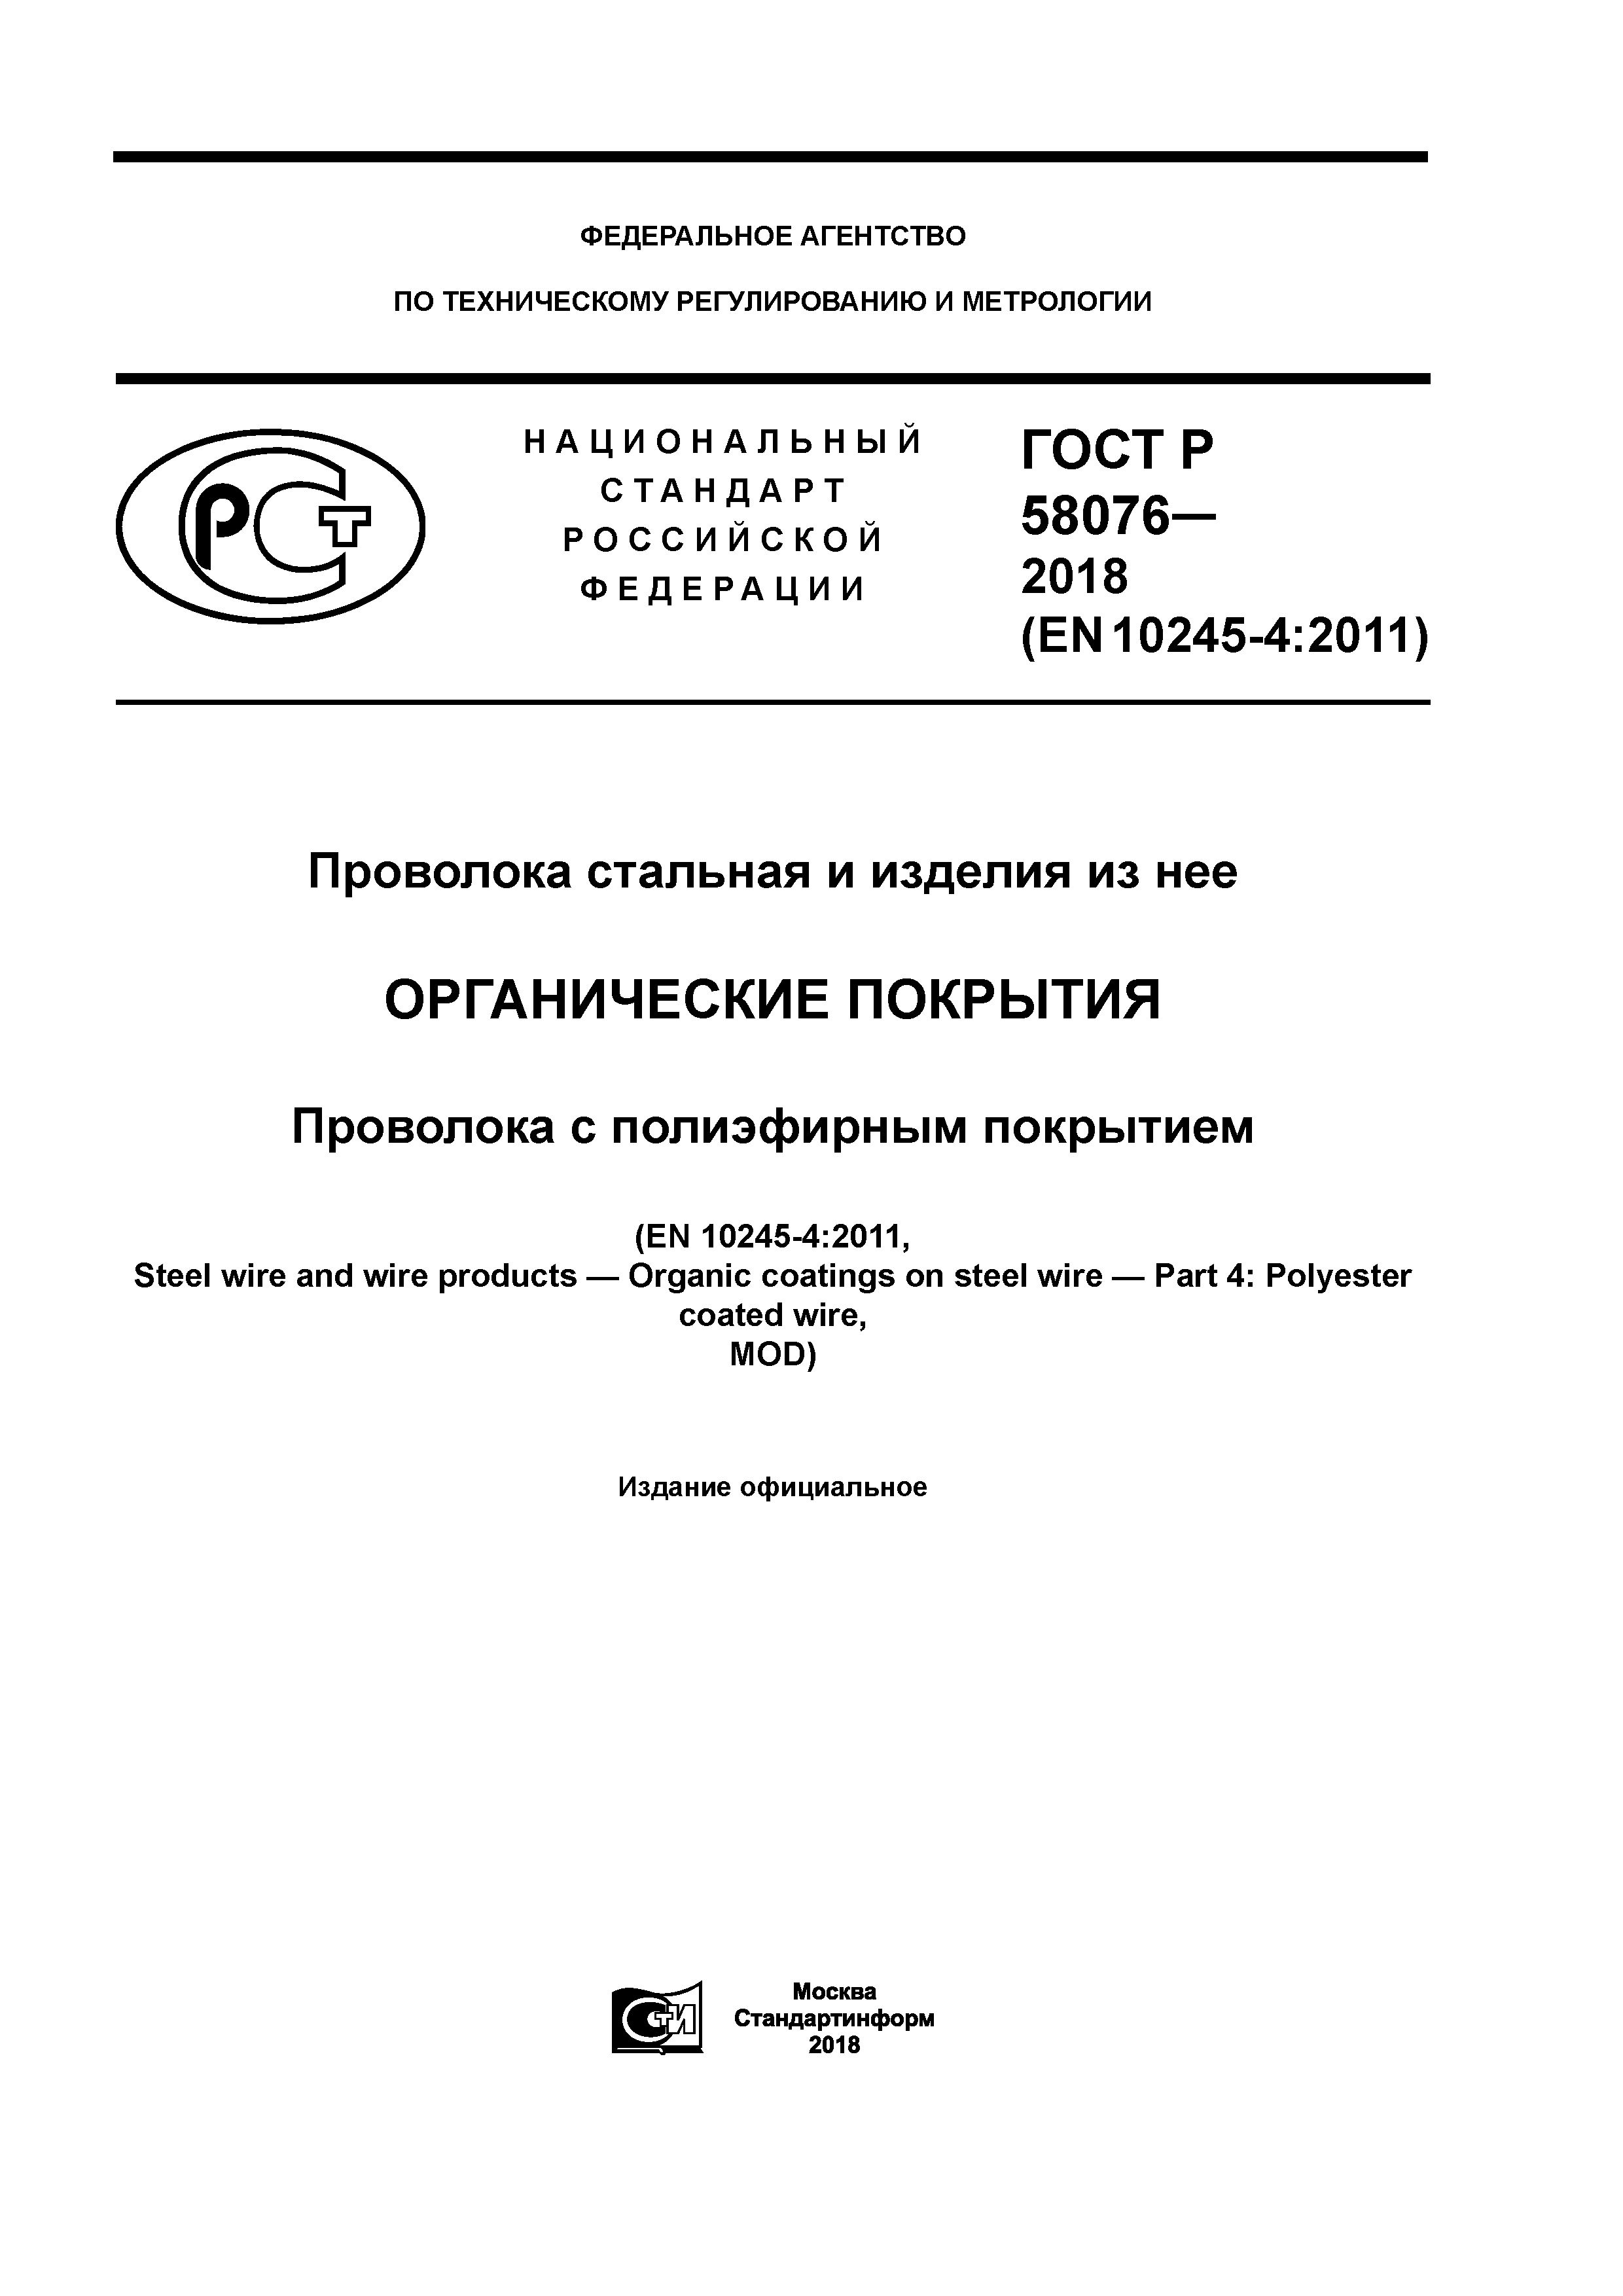 ГОСТ Р 58076-2018